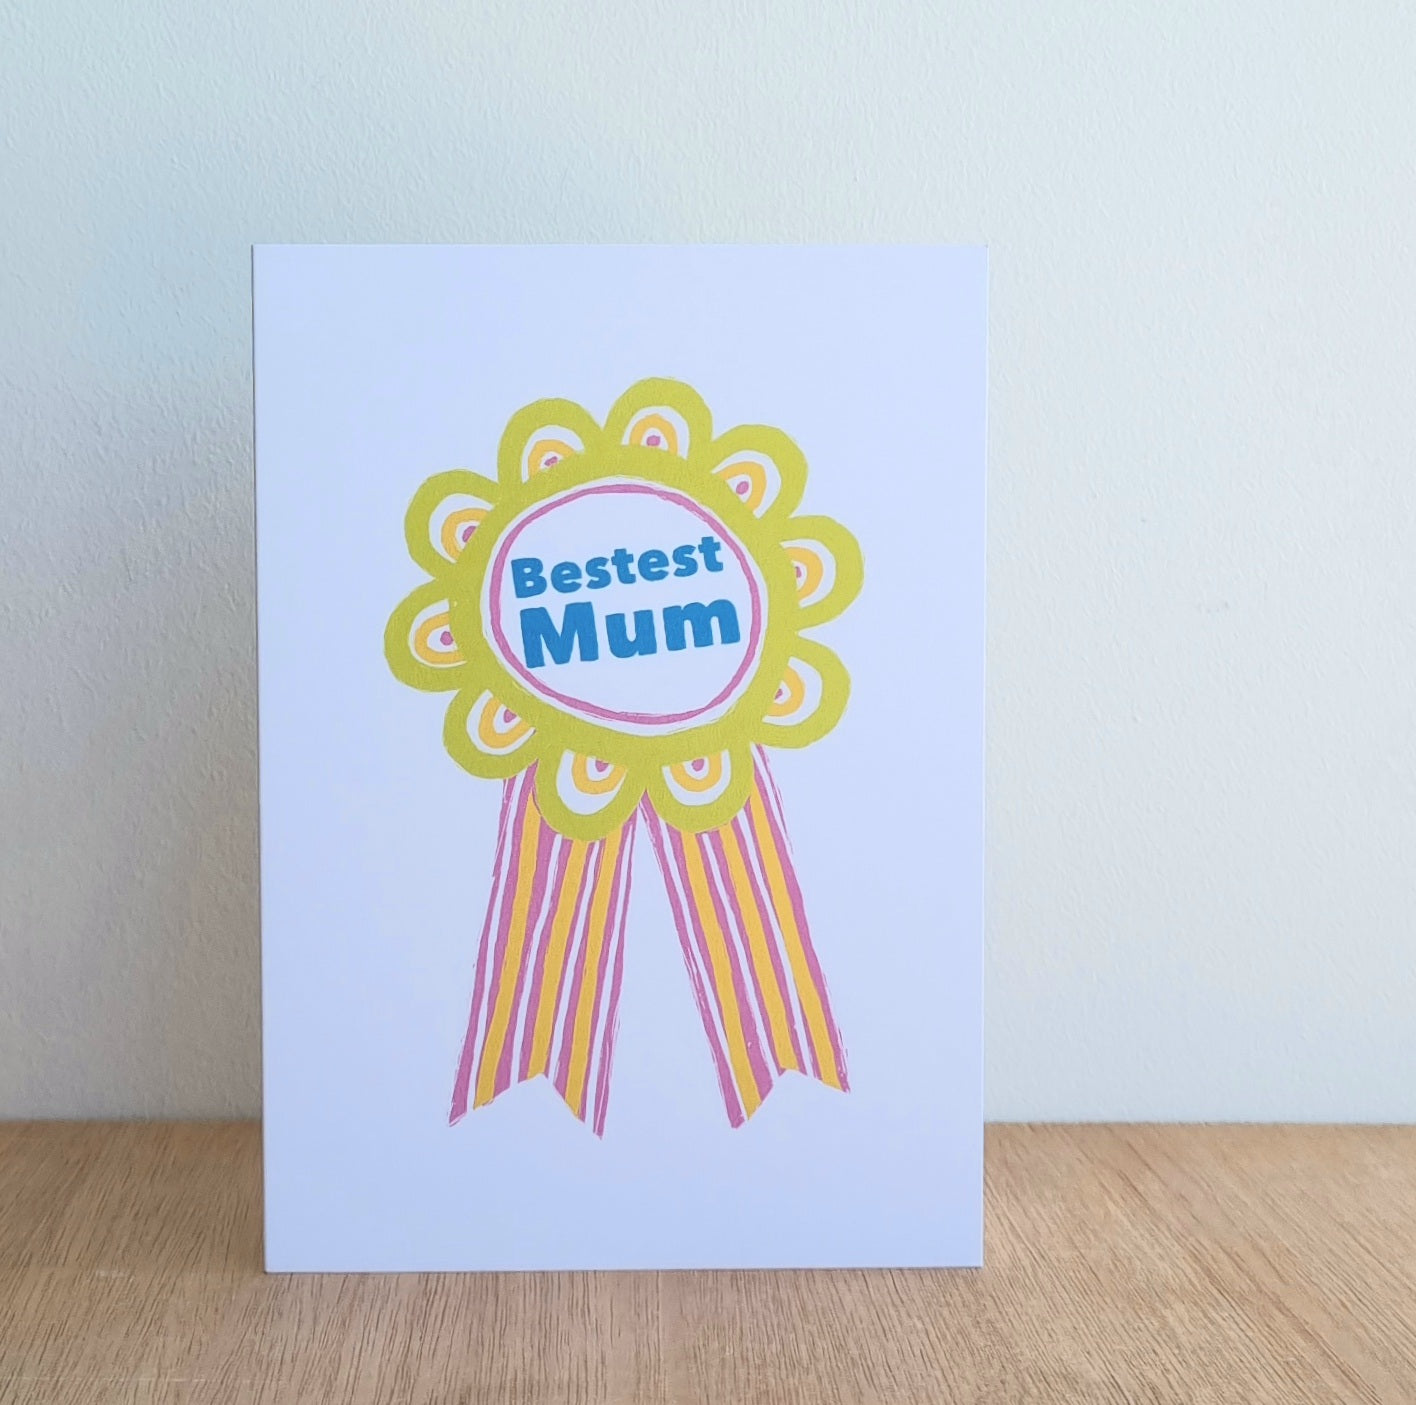 Bestest mum card